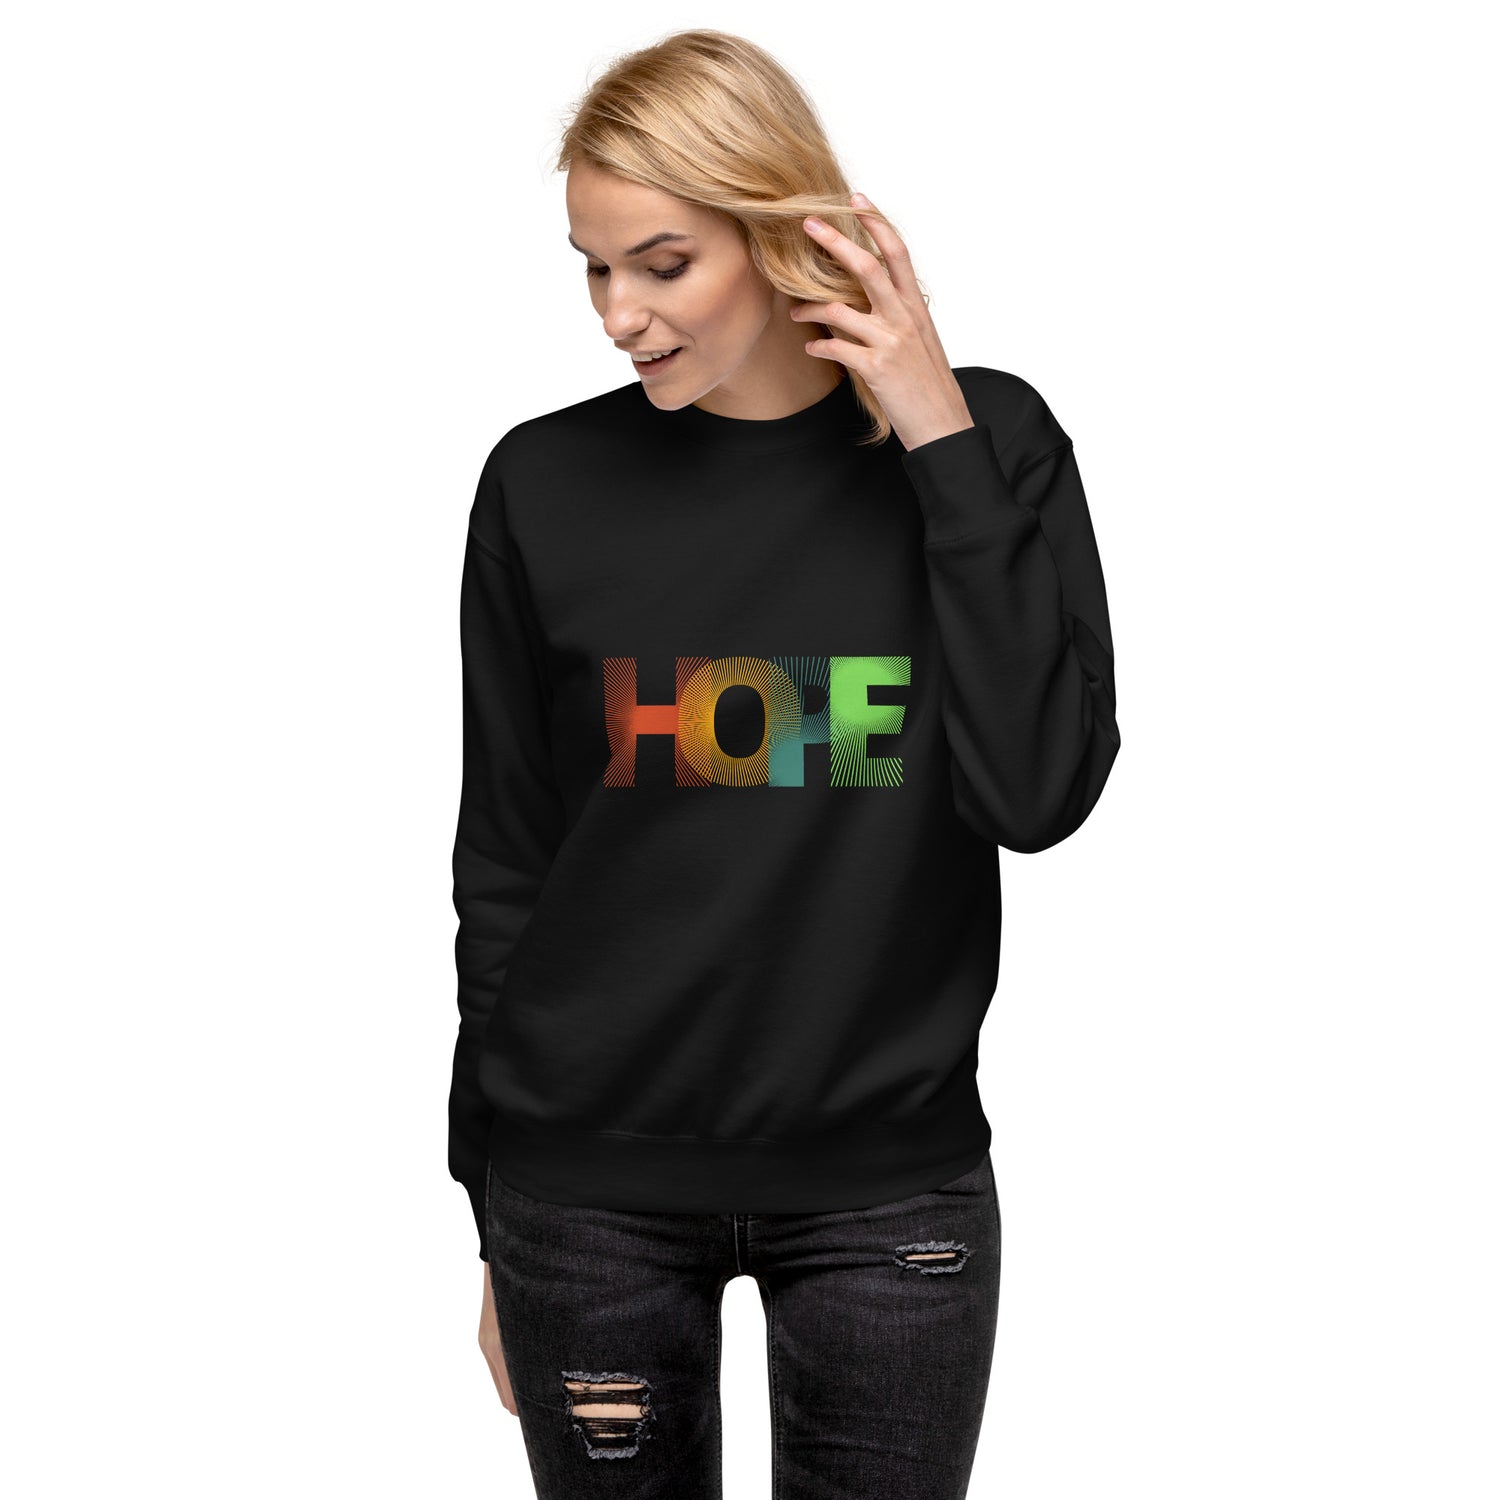 Unisex Premium Sweatshirt - Hope - Refine Zone